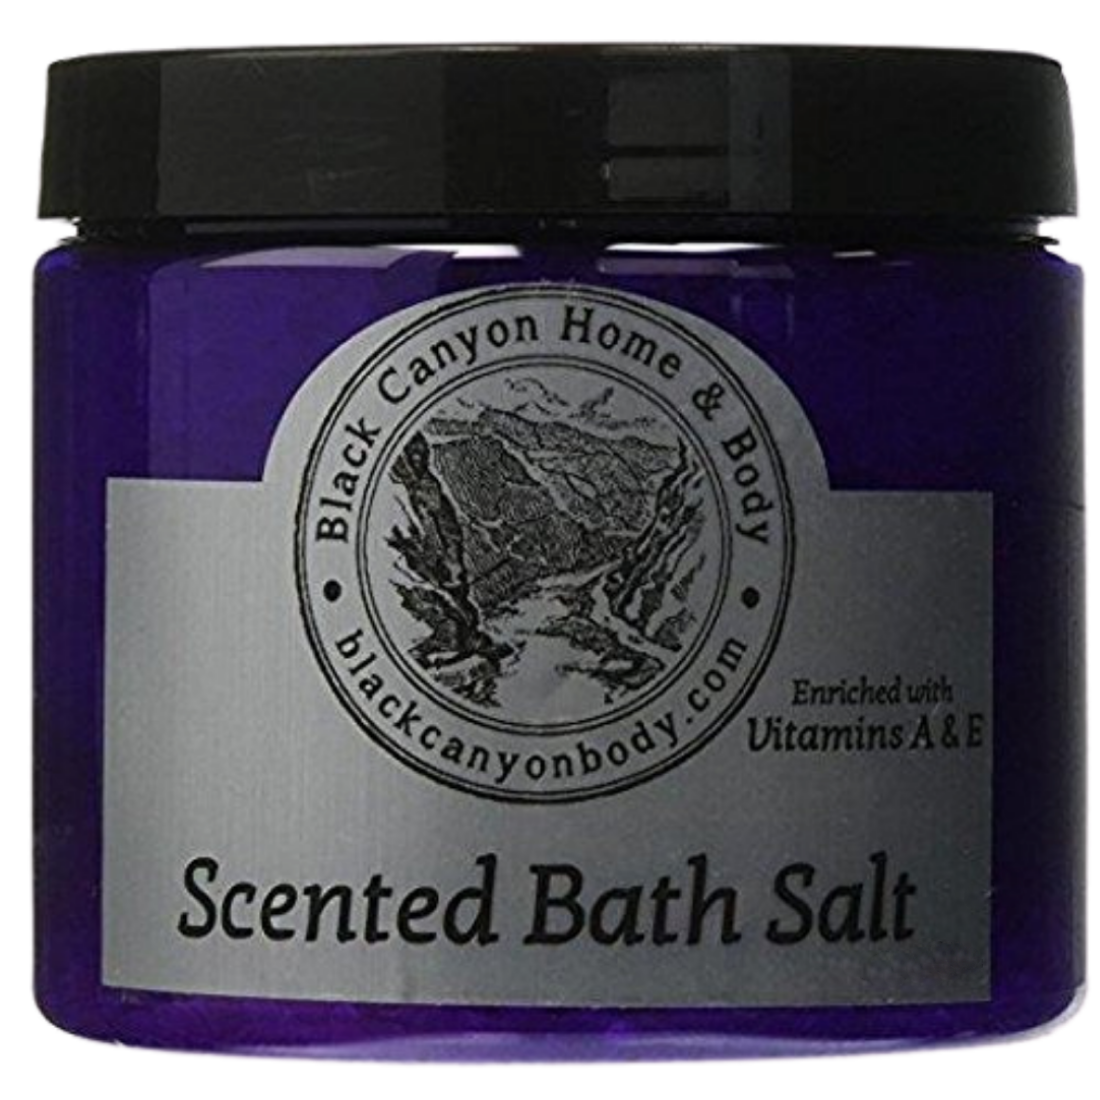 Black Canyon Frangipani Scented Sea Salt Bath Soak